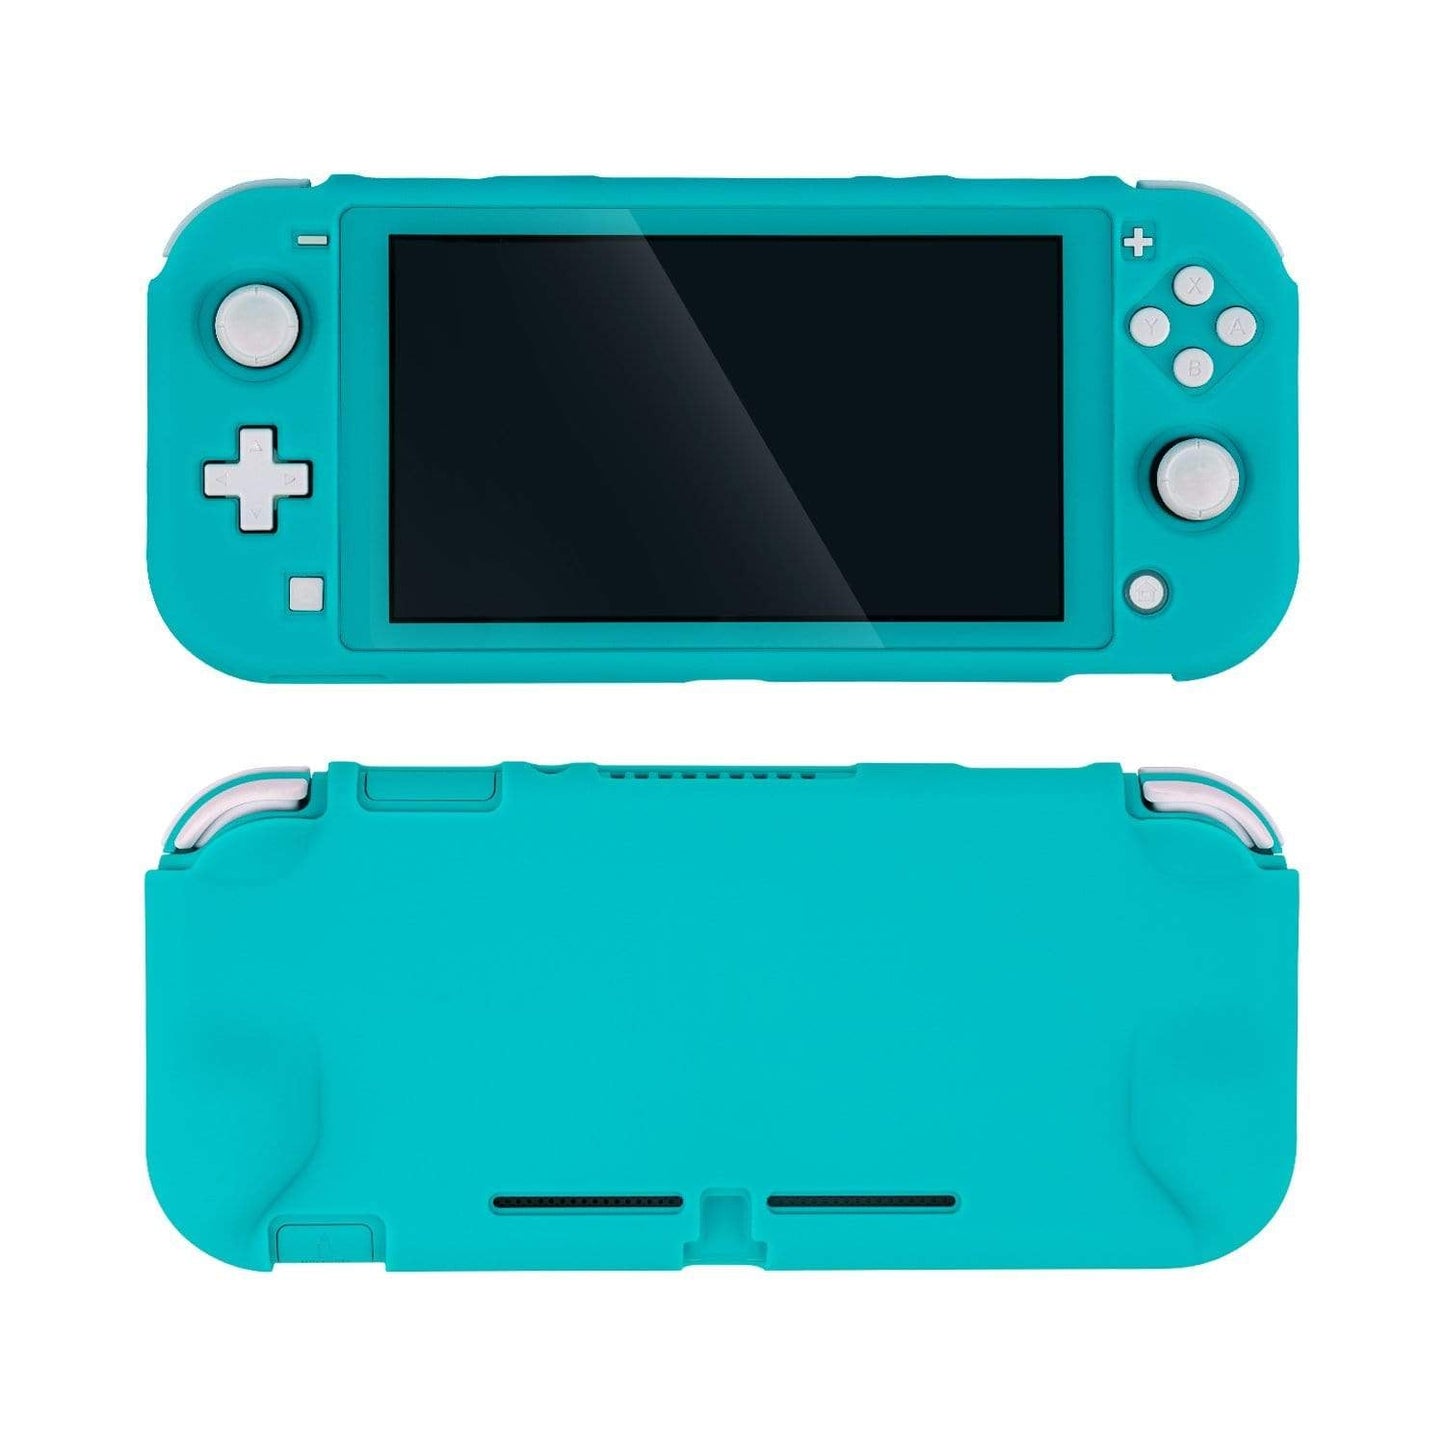 Nintendo Switch Lite Case - Hard Shell Case Cover - Switch Lite Protective Case Cover - Switch Lite Accessories